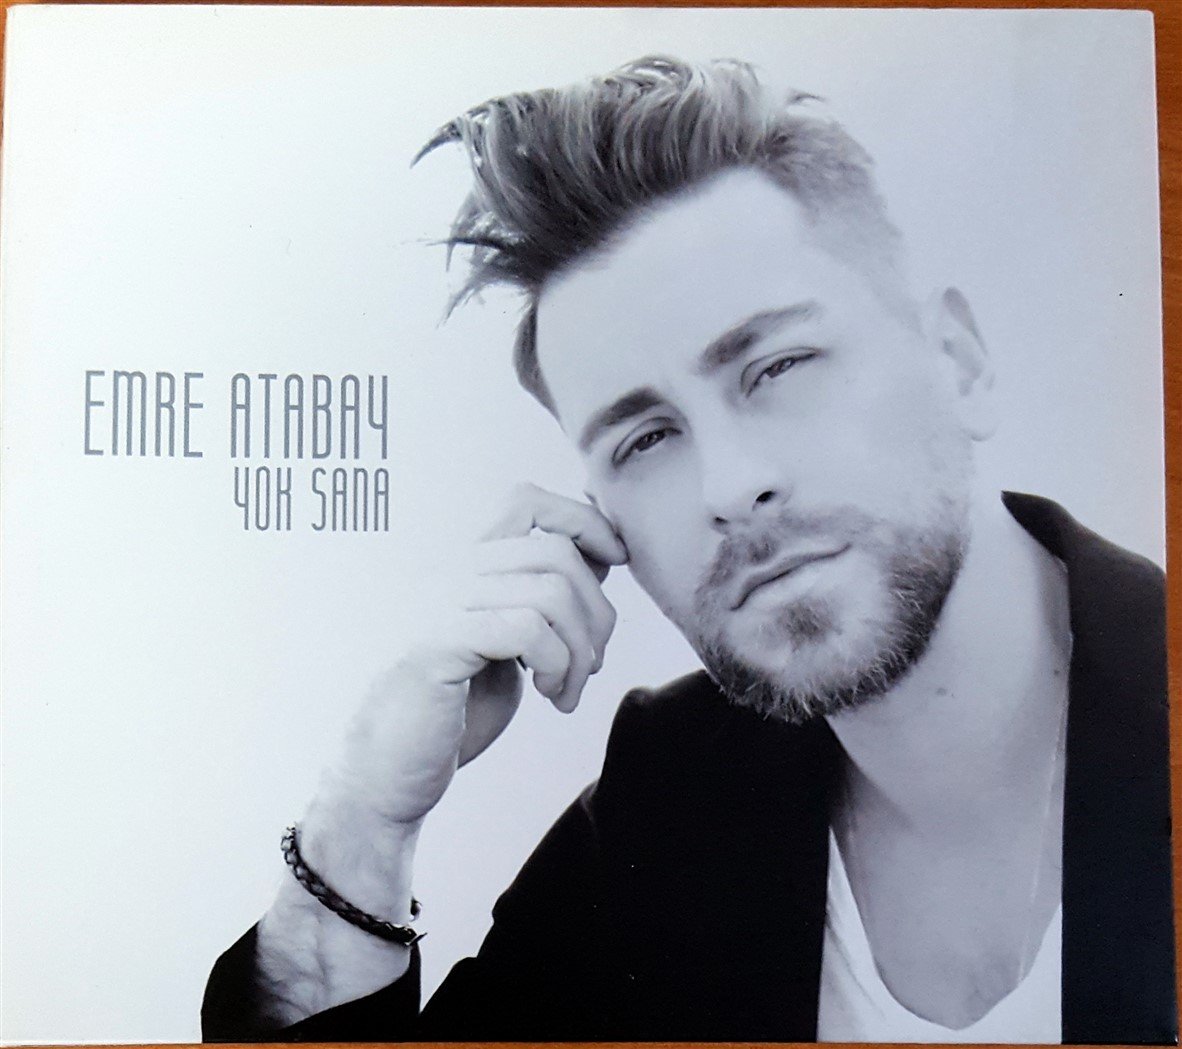 EMRE ATABAY - YOK SANA İMZALI SINGLE CD 2.EL